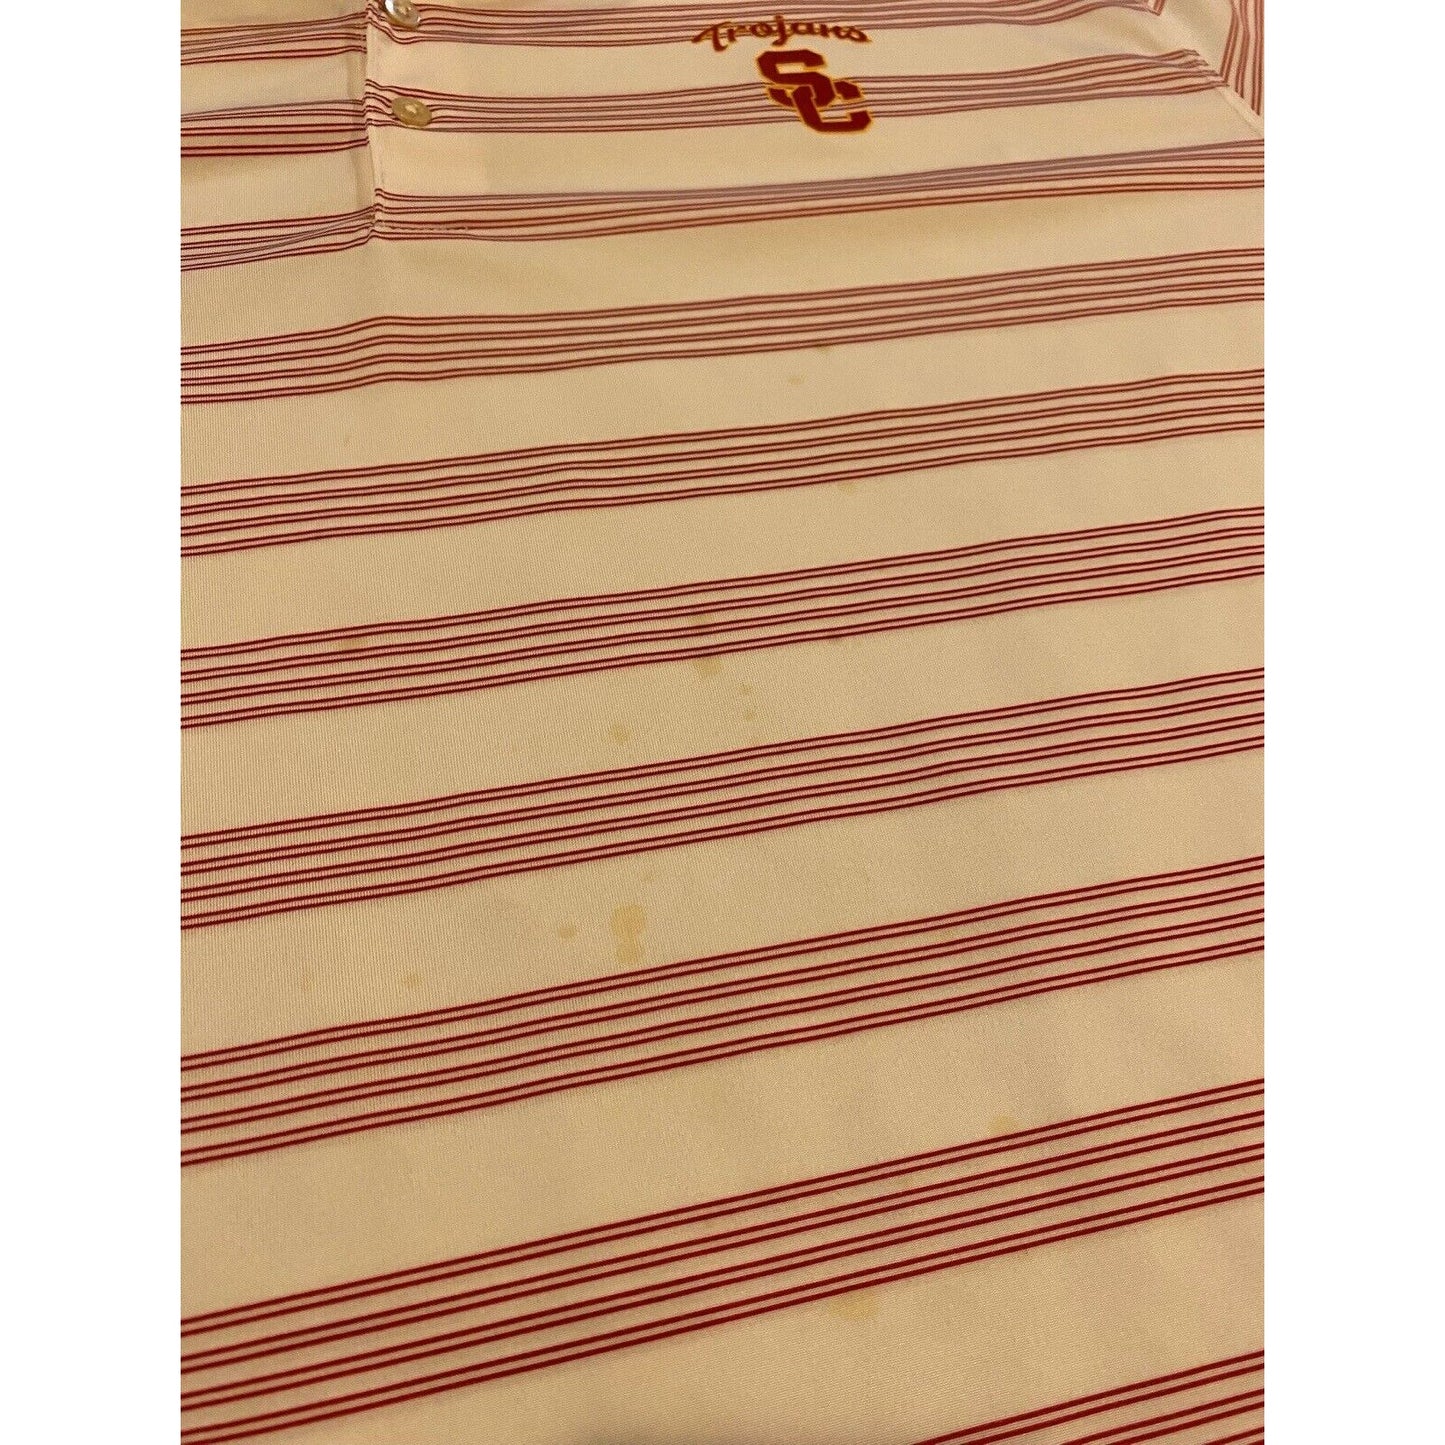 Nike USC Trojans golf shirt extra large dri fit mens adult white striped polo